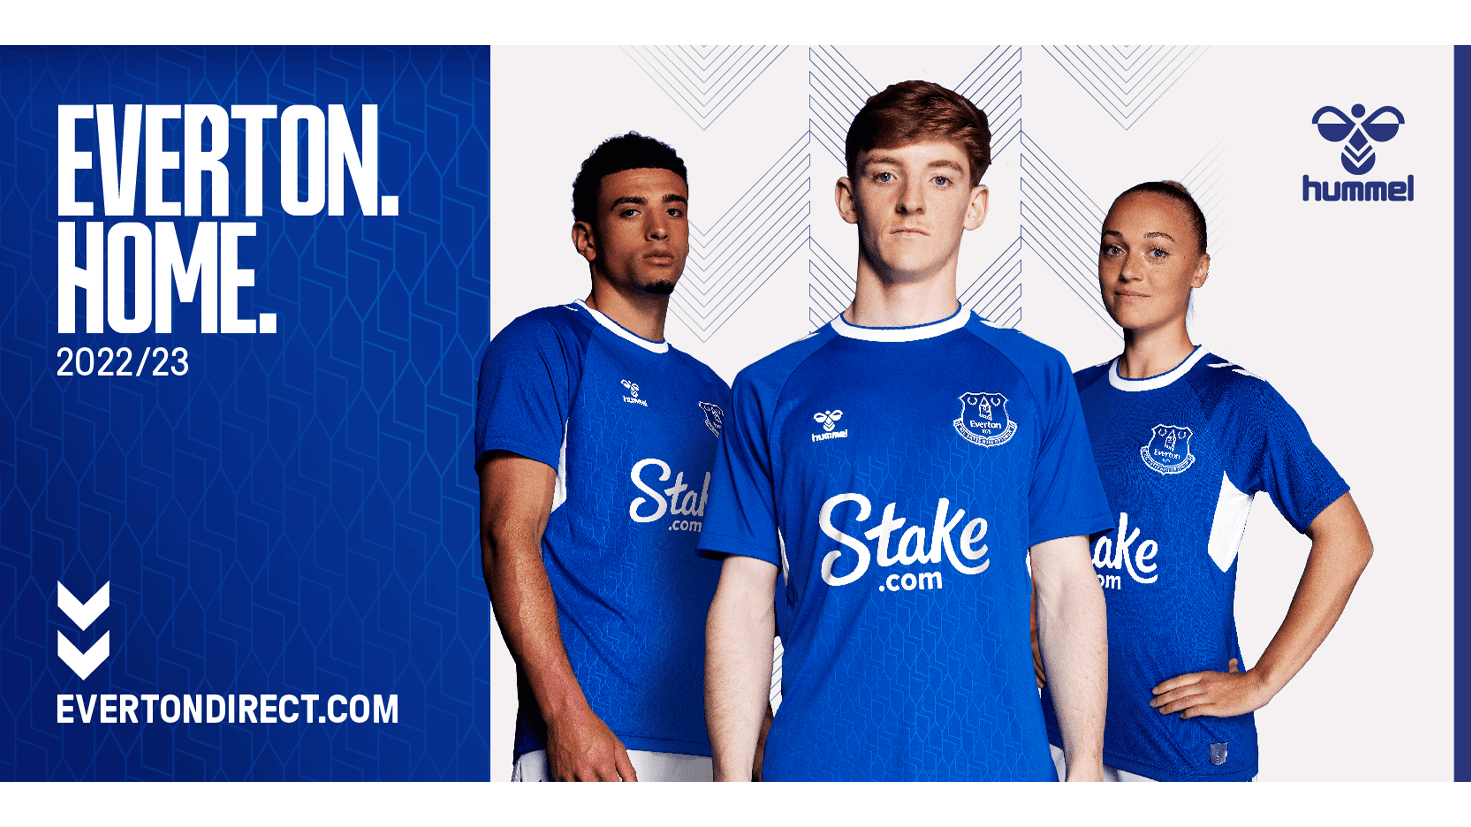 Stake.com Everton Premier League Shirt Sponsorship 2022/23